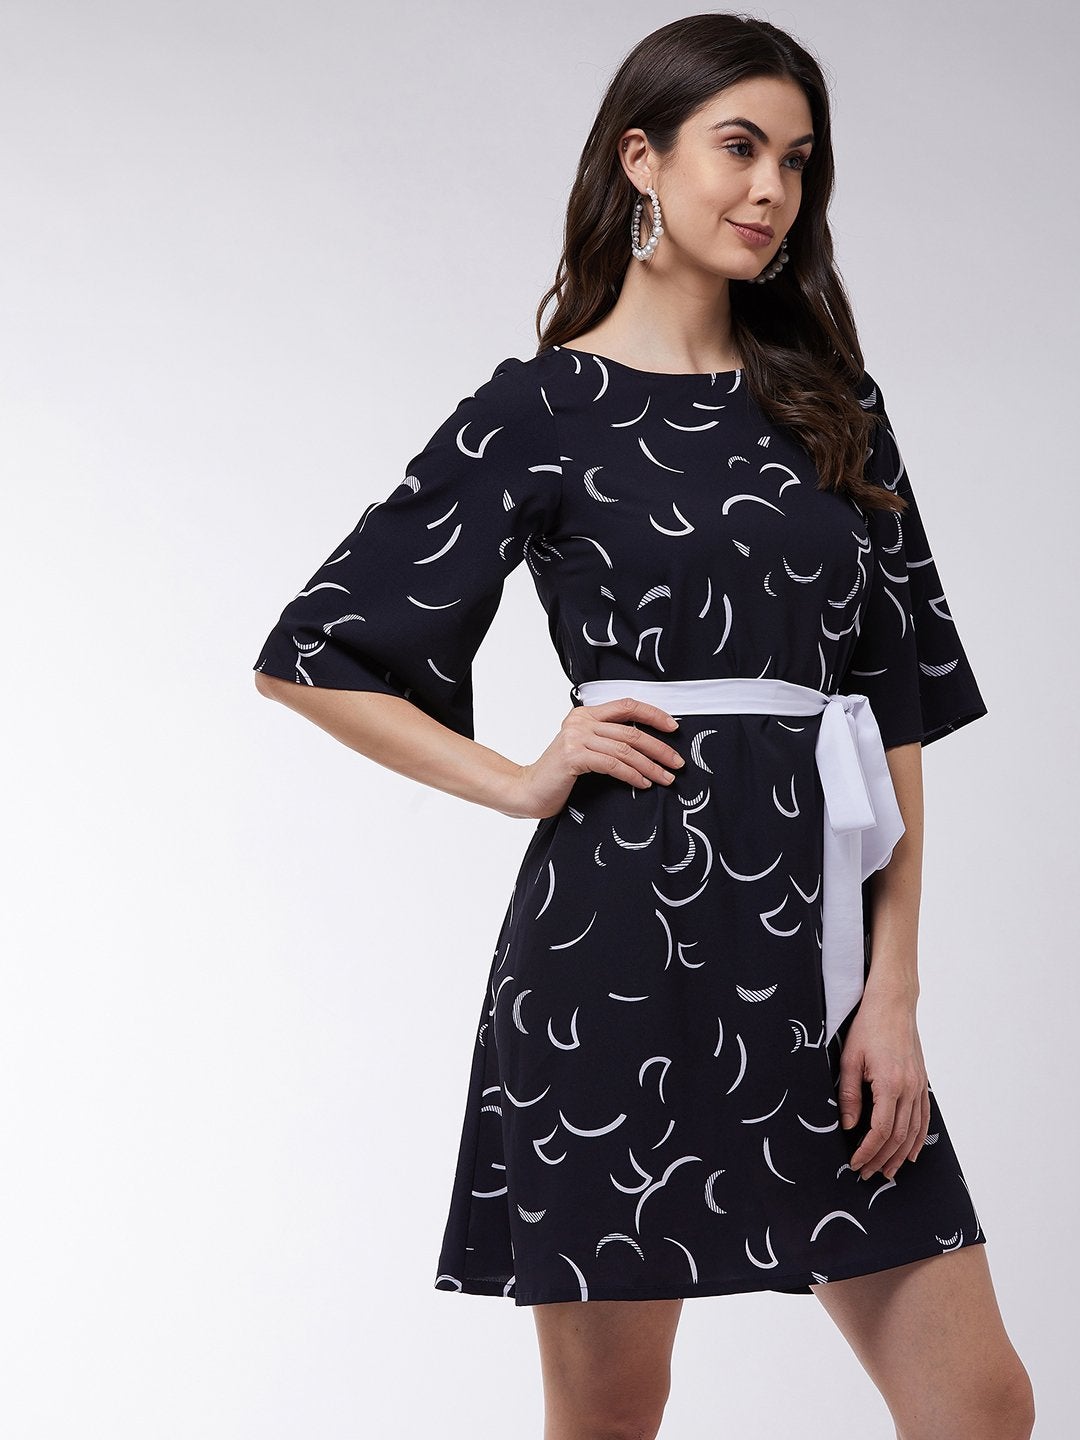 Women's Moon Printed A-Line Dress - Pannkh